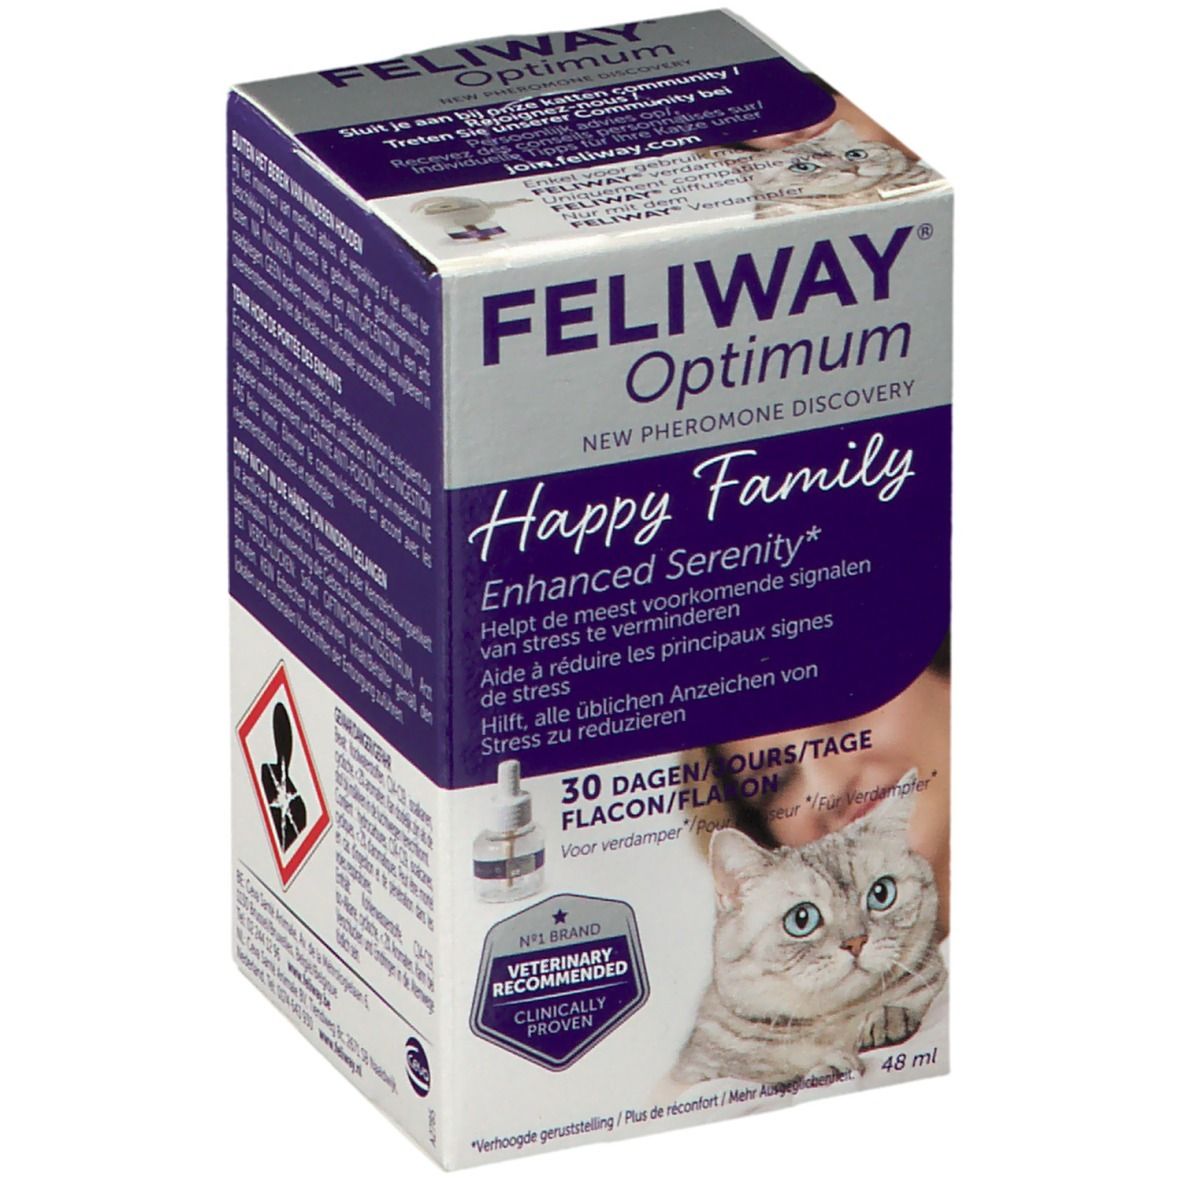 FELIWAY® Optimum Happy Family Recharge 30 jours